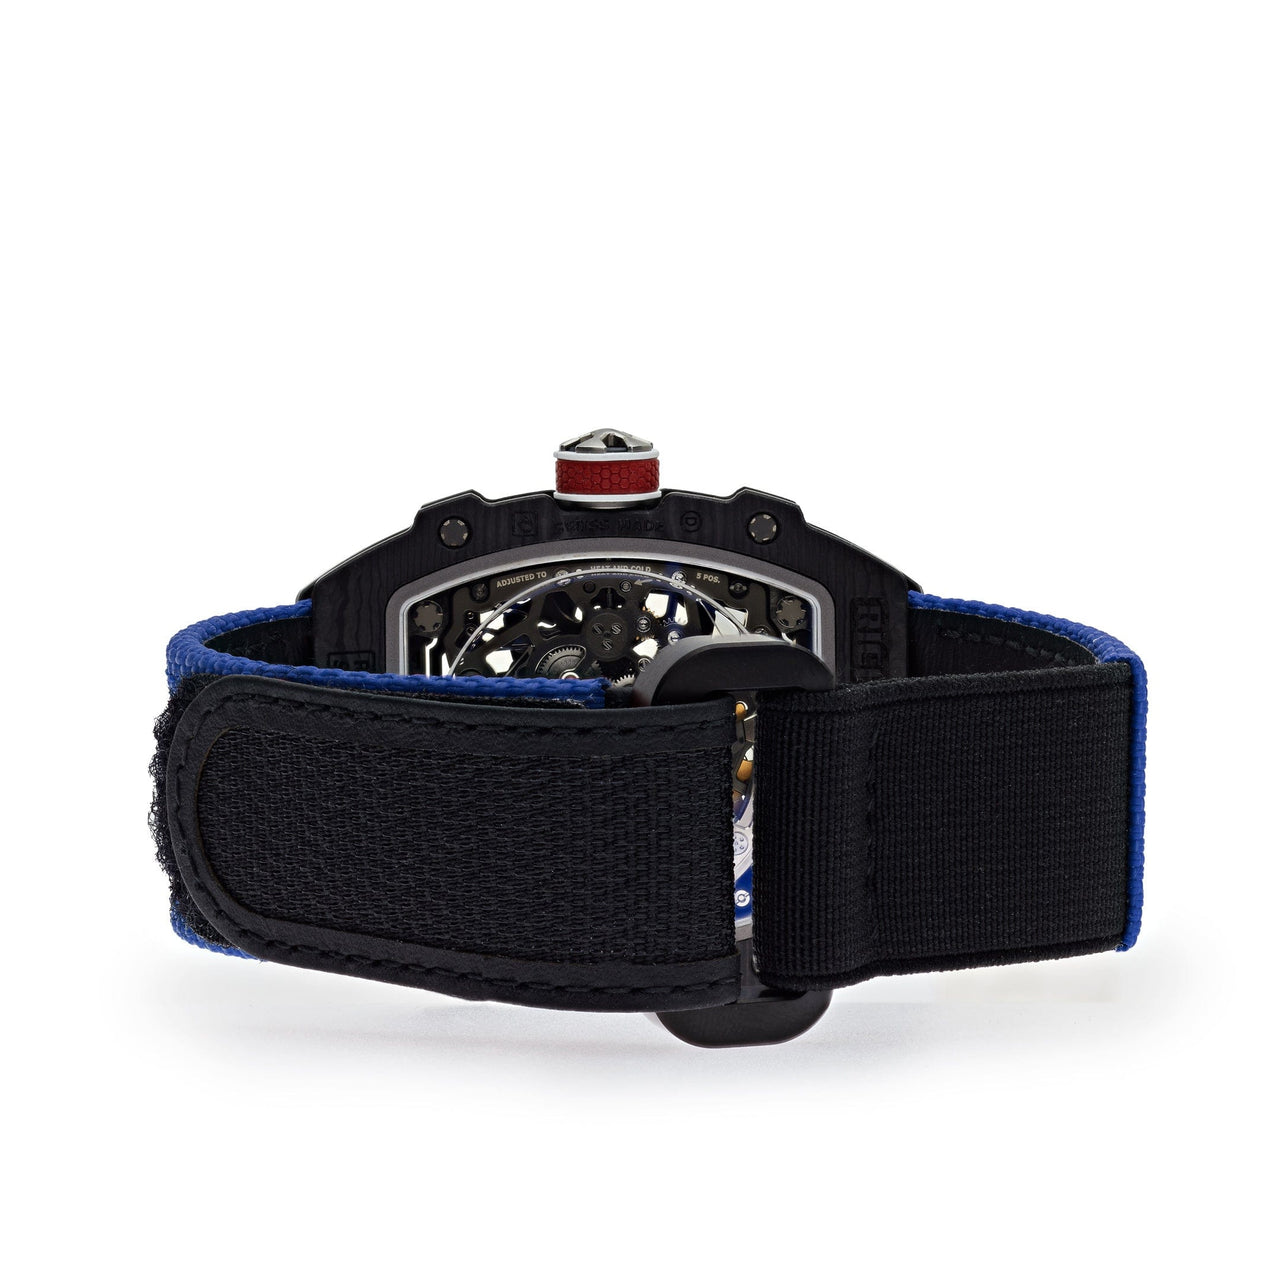 Luxury Watch Richard Mille Automatic Sébastien Ogier RM 67-02 Wrist Aficionado